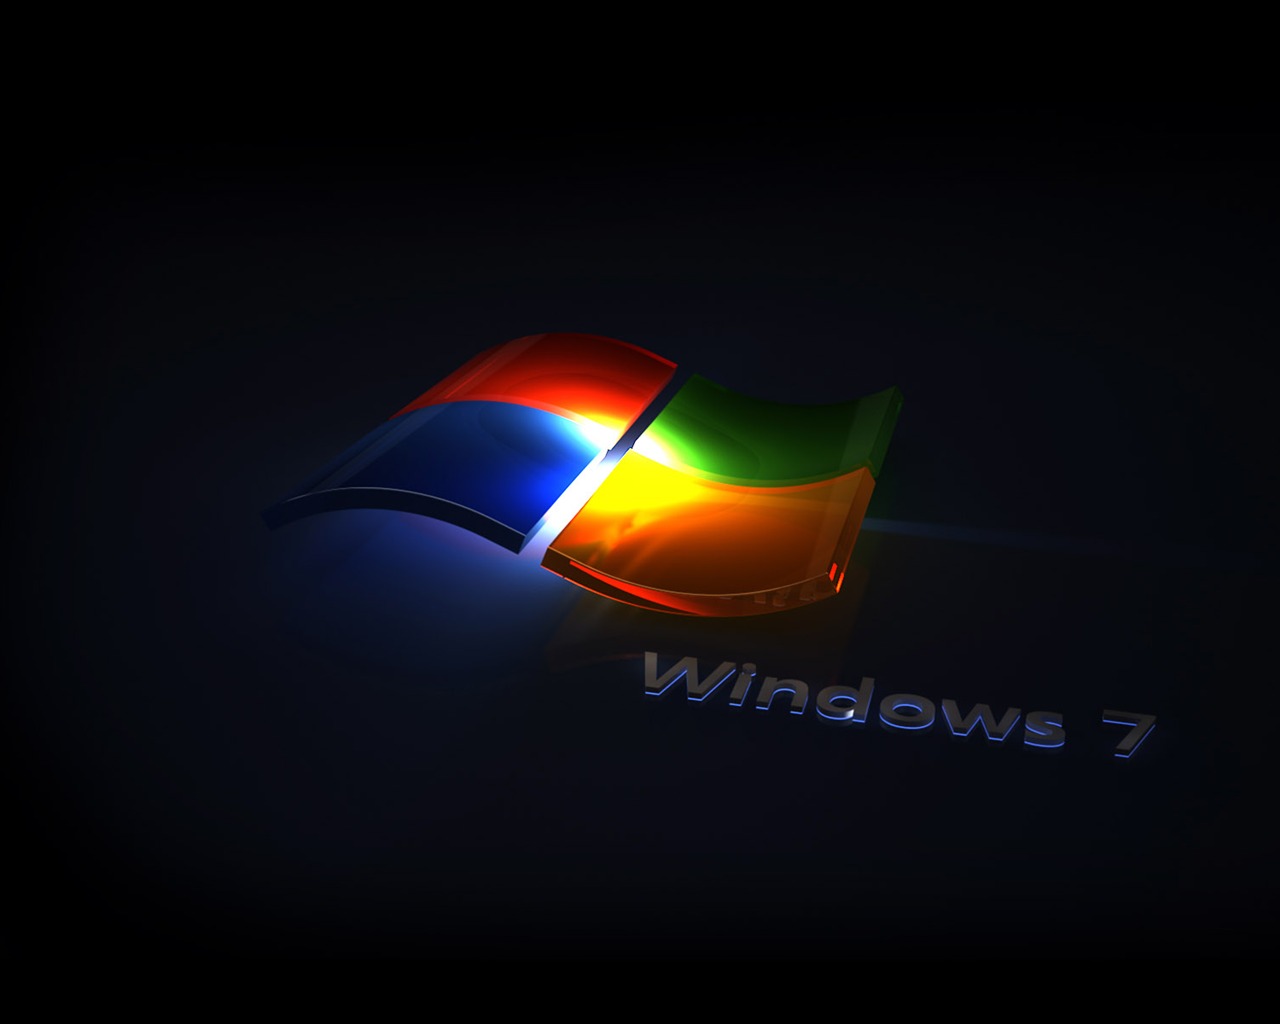 Windows7のテーマの壁紙 2 18 1280x1024 壁紙ダウンロード Windows7のテーマの壁紙 2 システム 壁紙 V3の壁紙